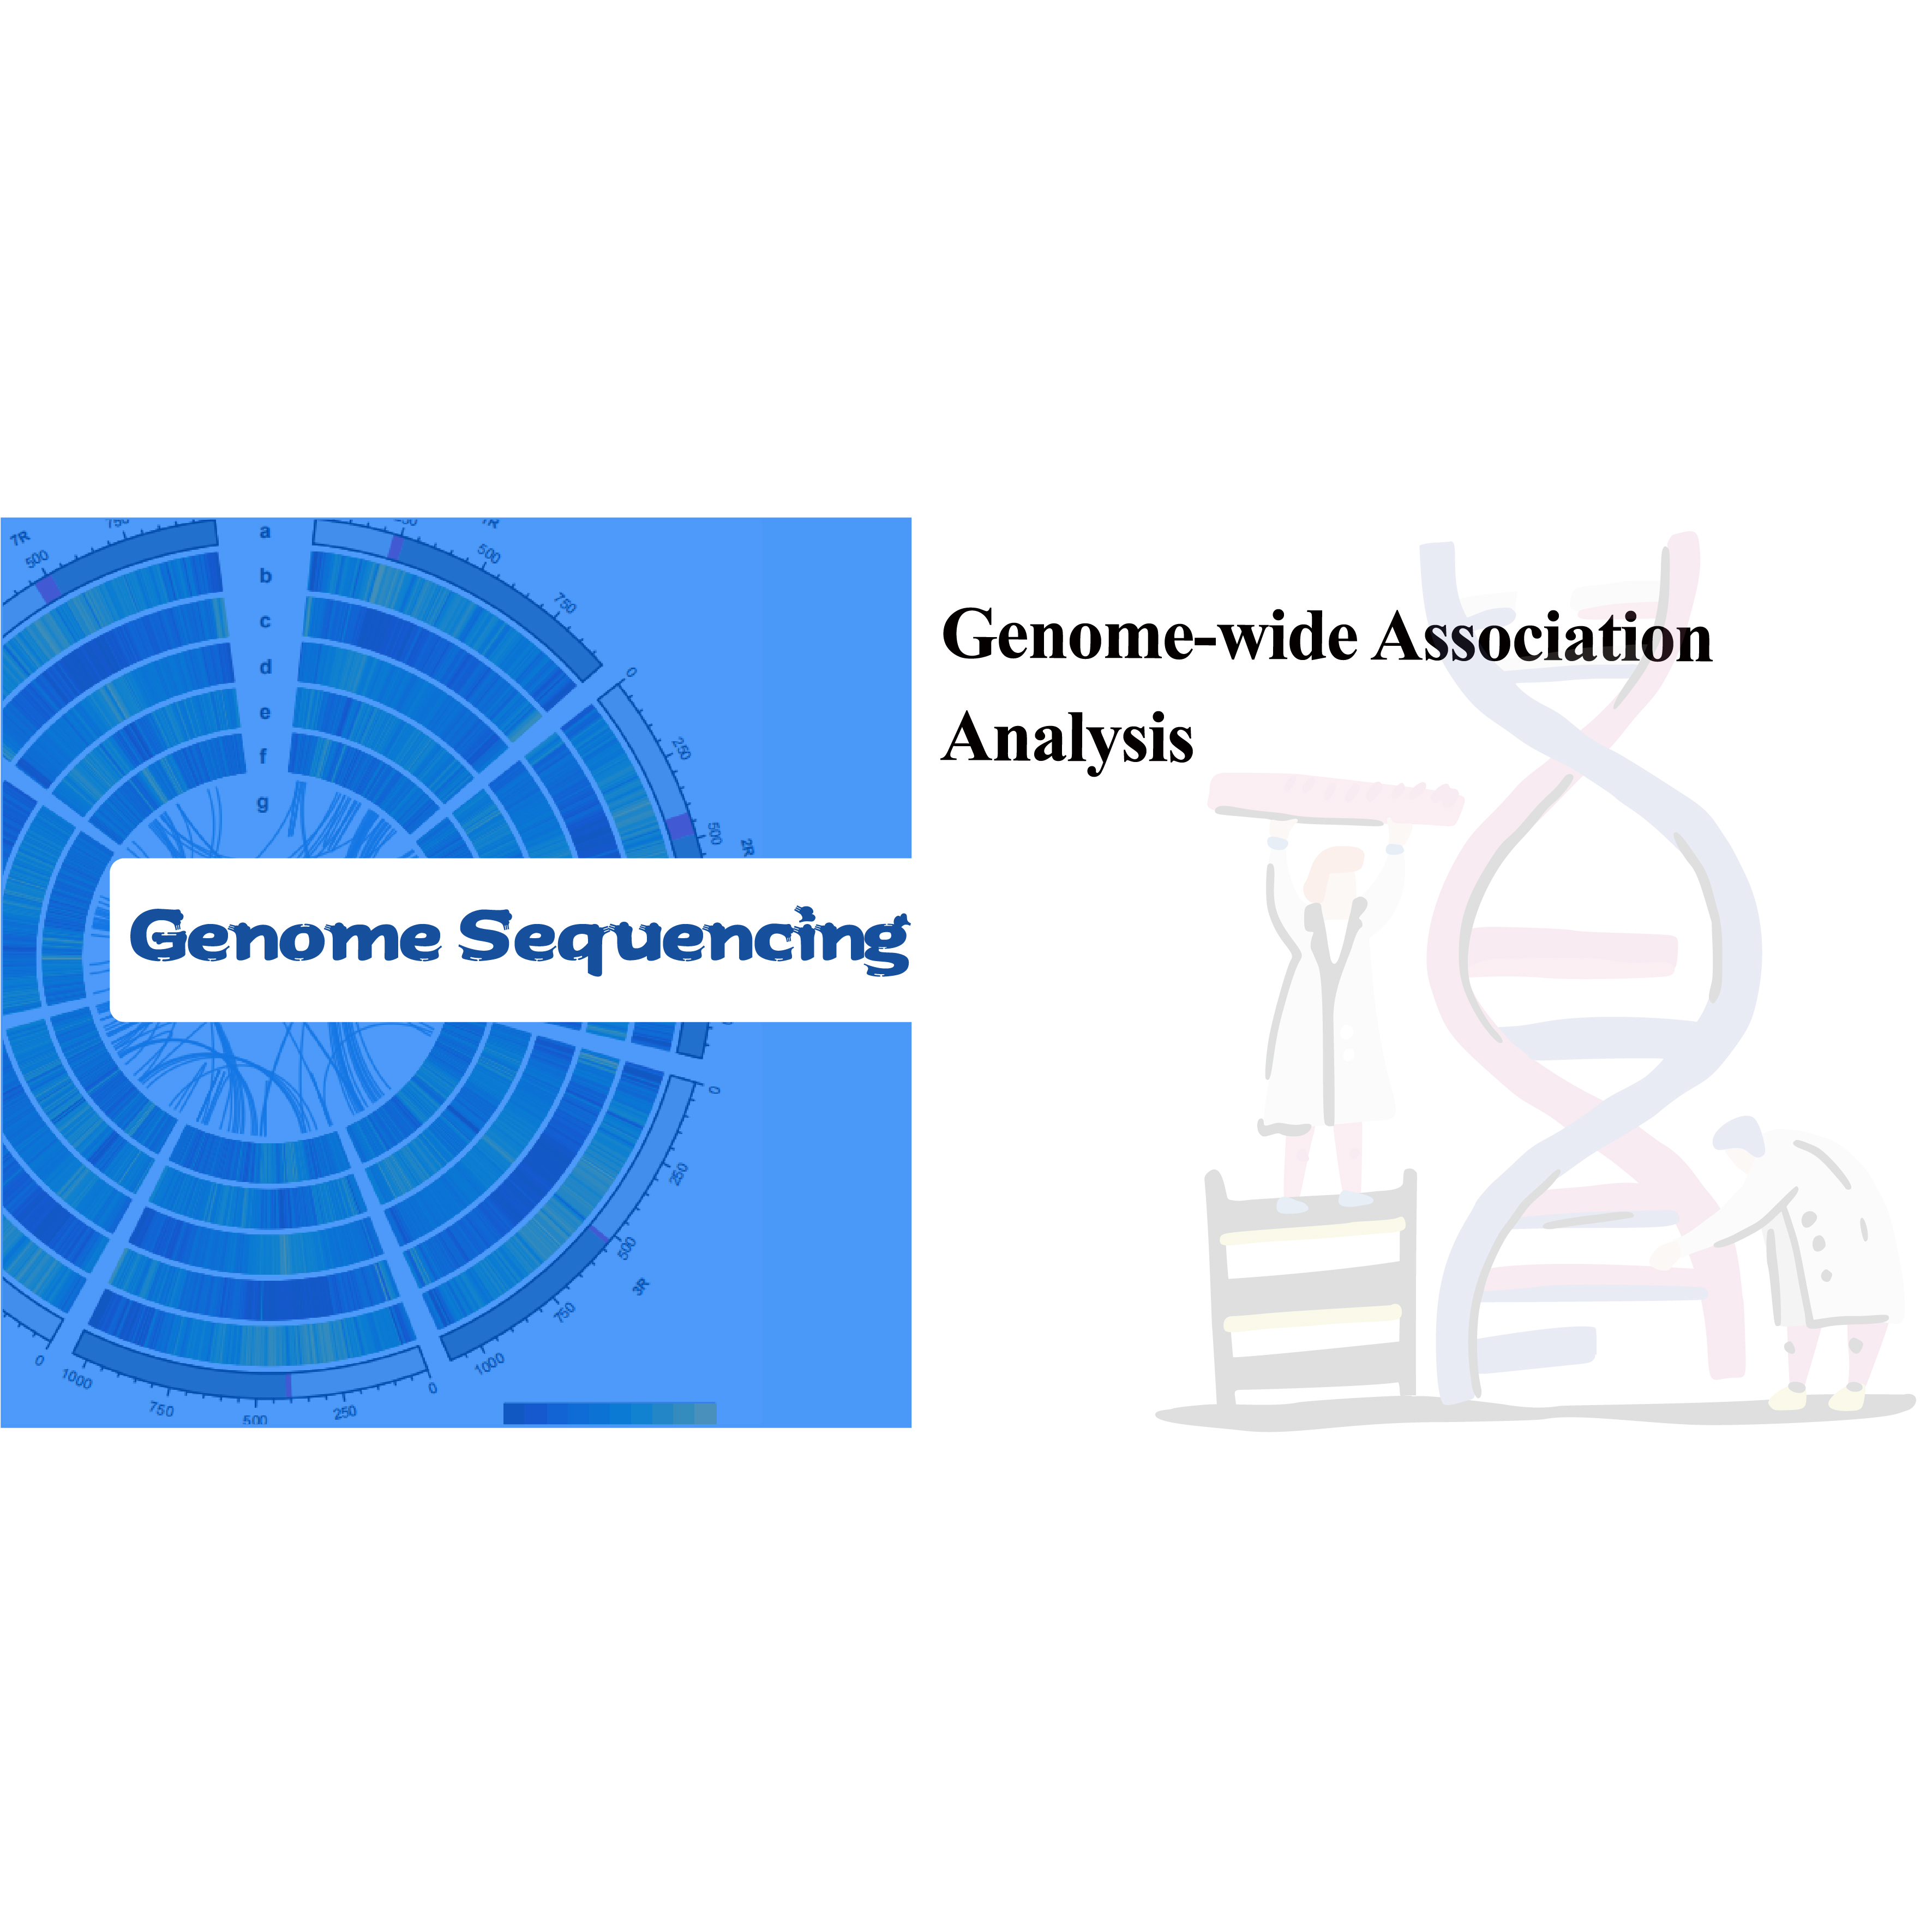 Genome-wide Association Analysis